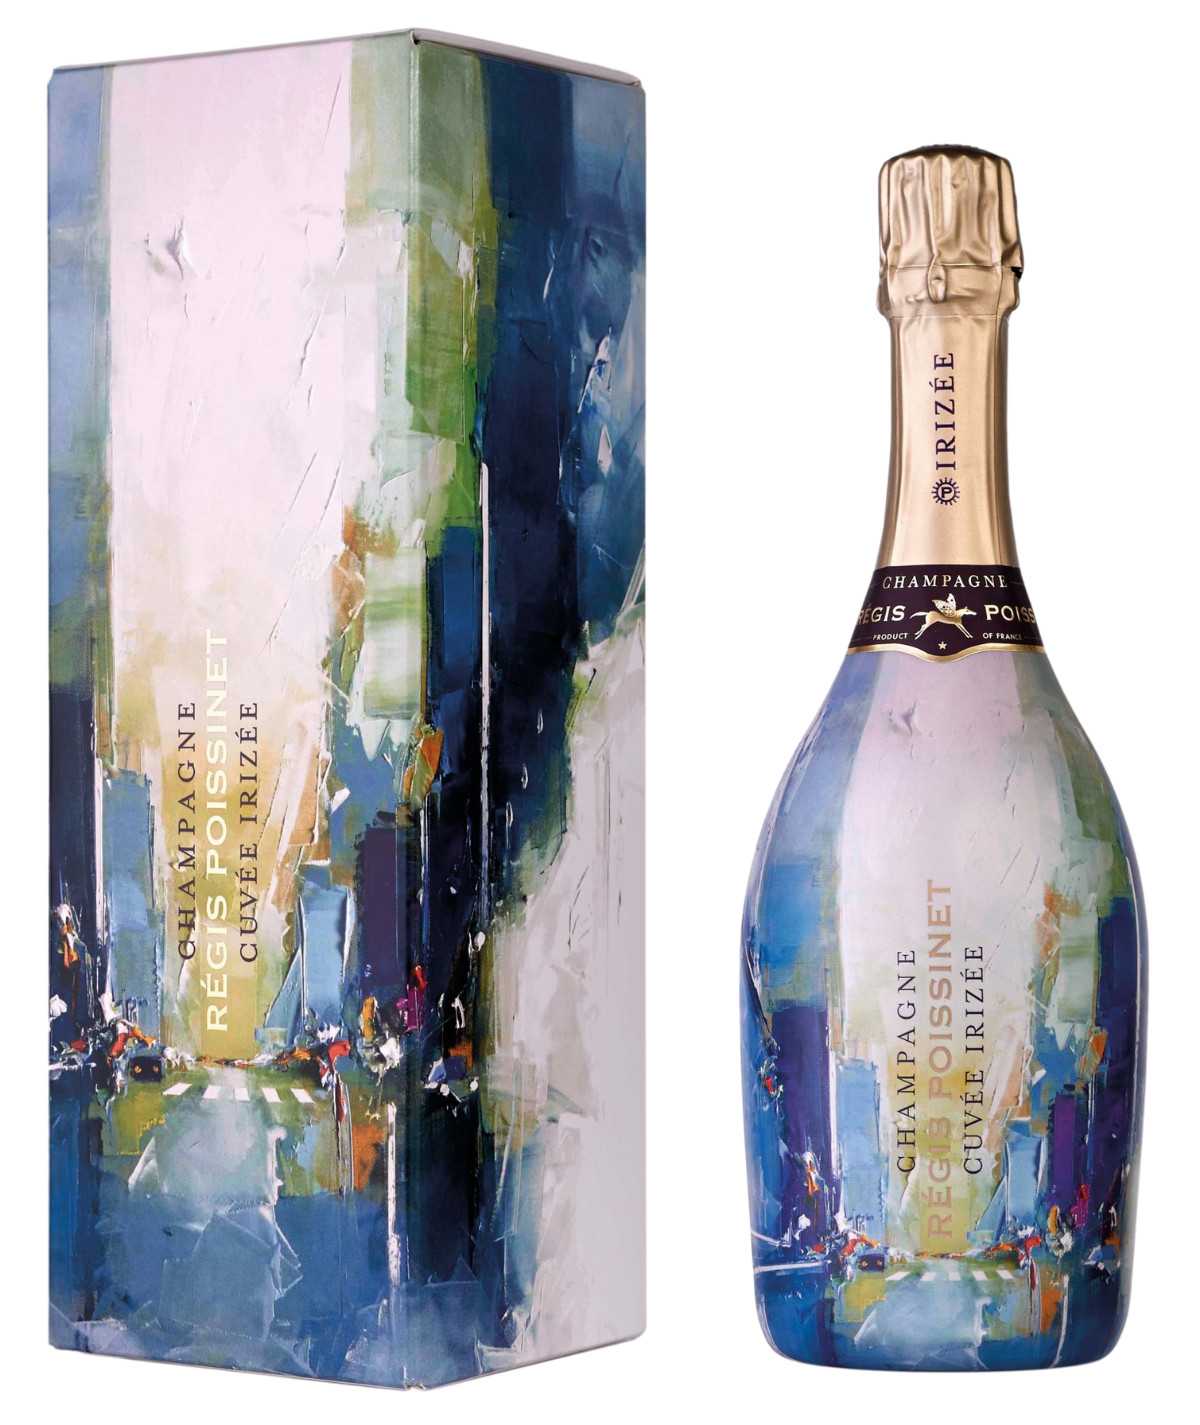 Champagne POISSINET Cuvée Irizée Meunier Extra-Brut Millésime 2013 “sleevée”